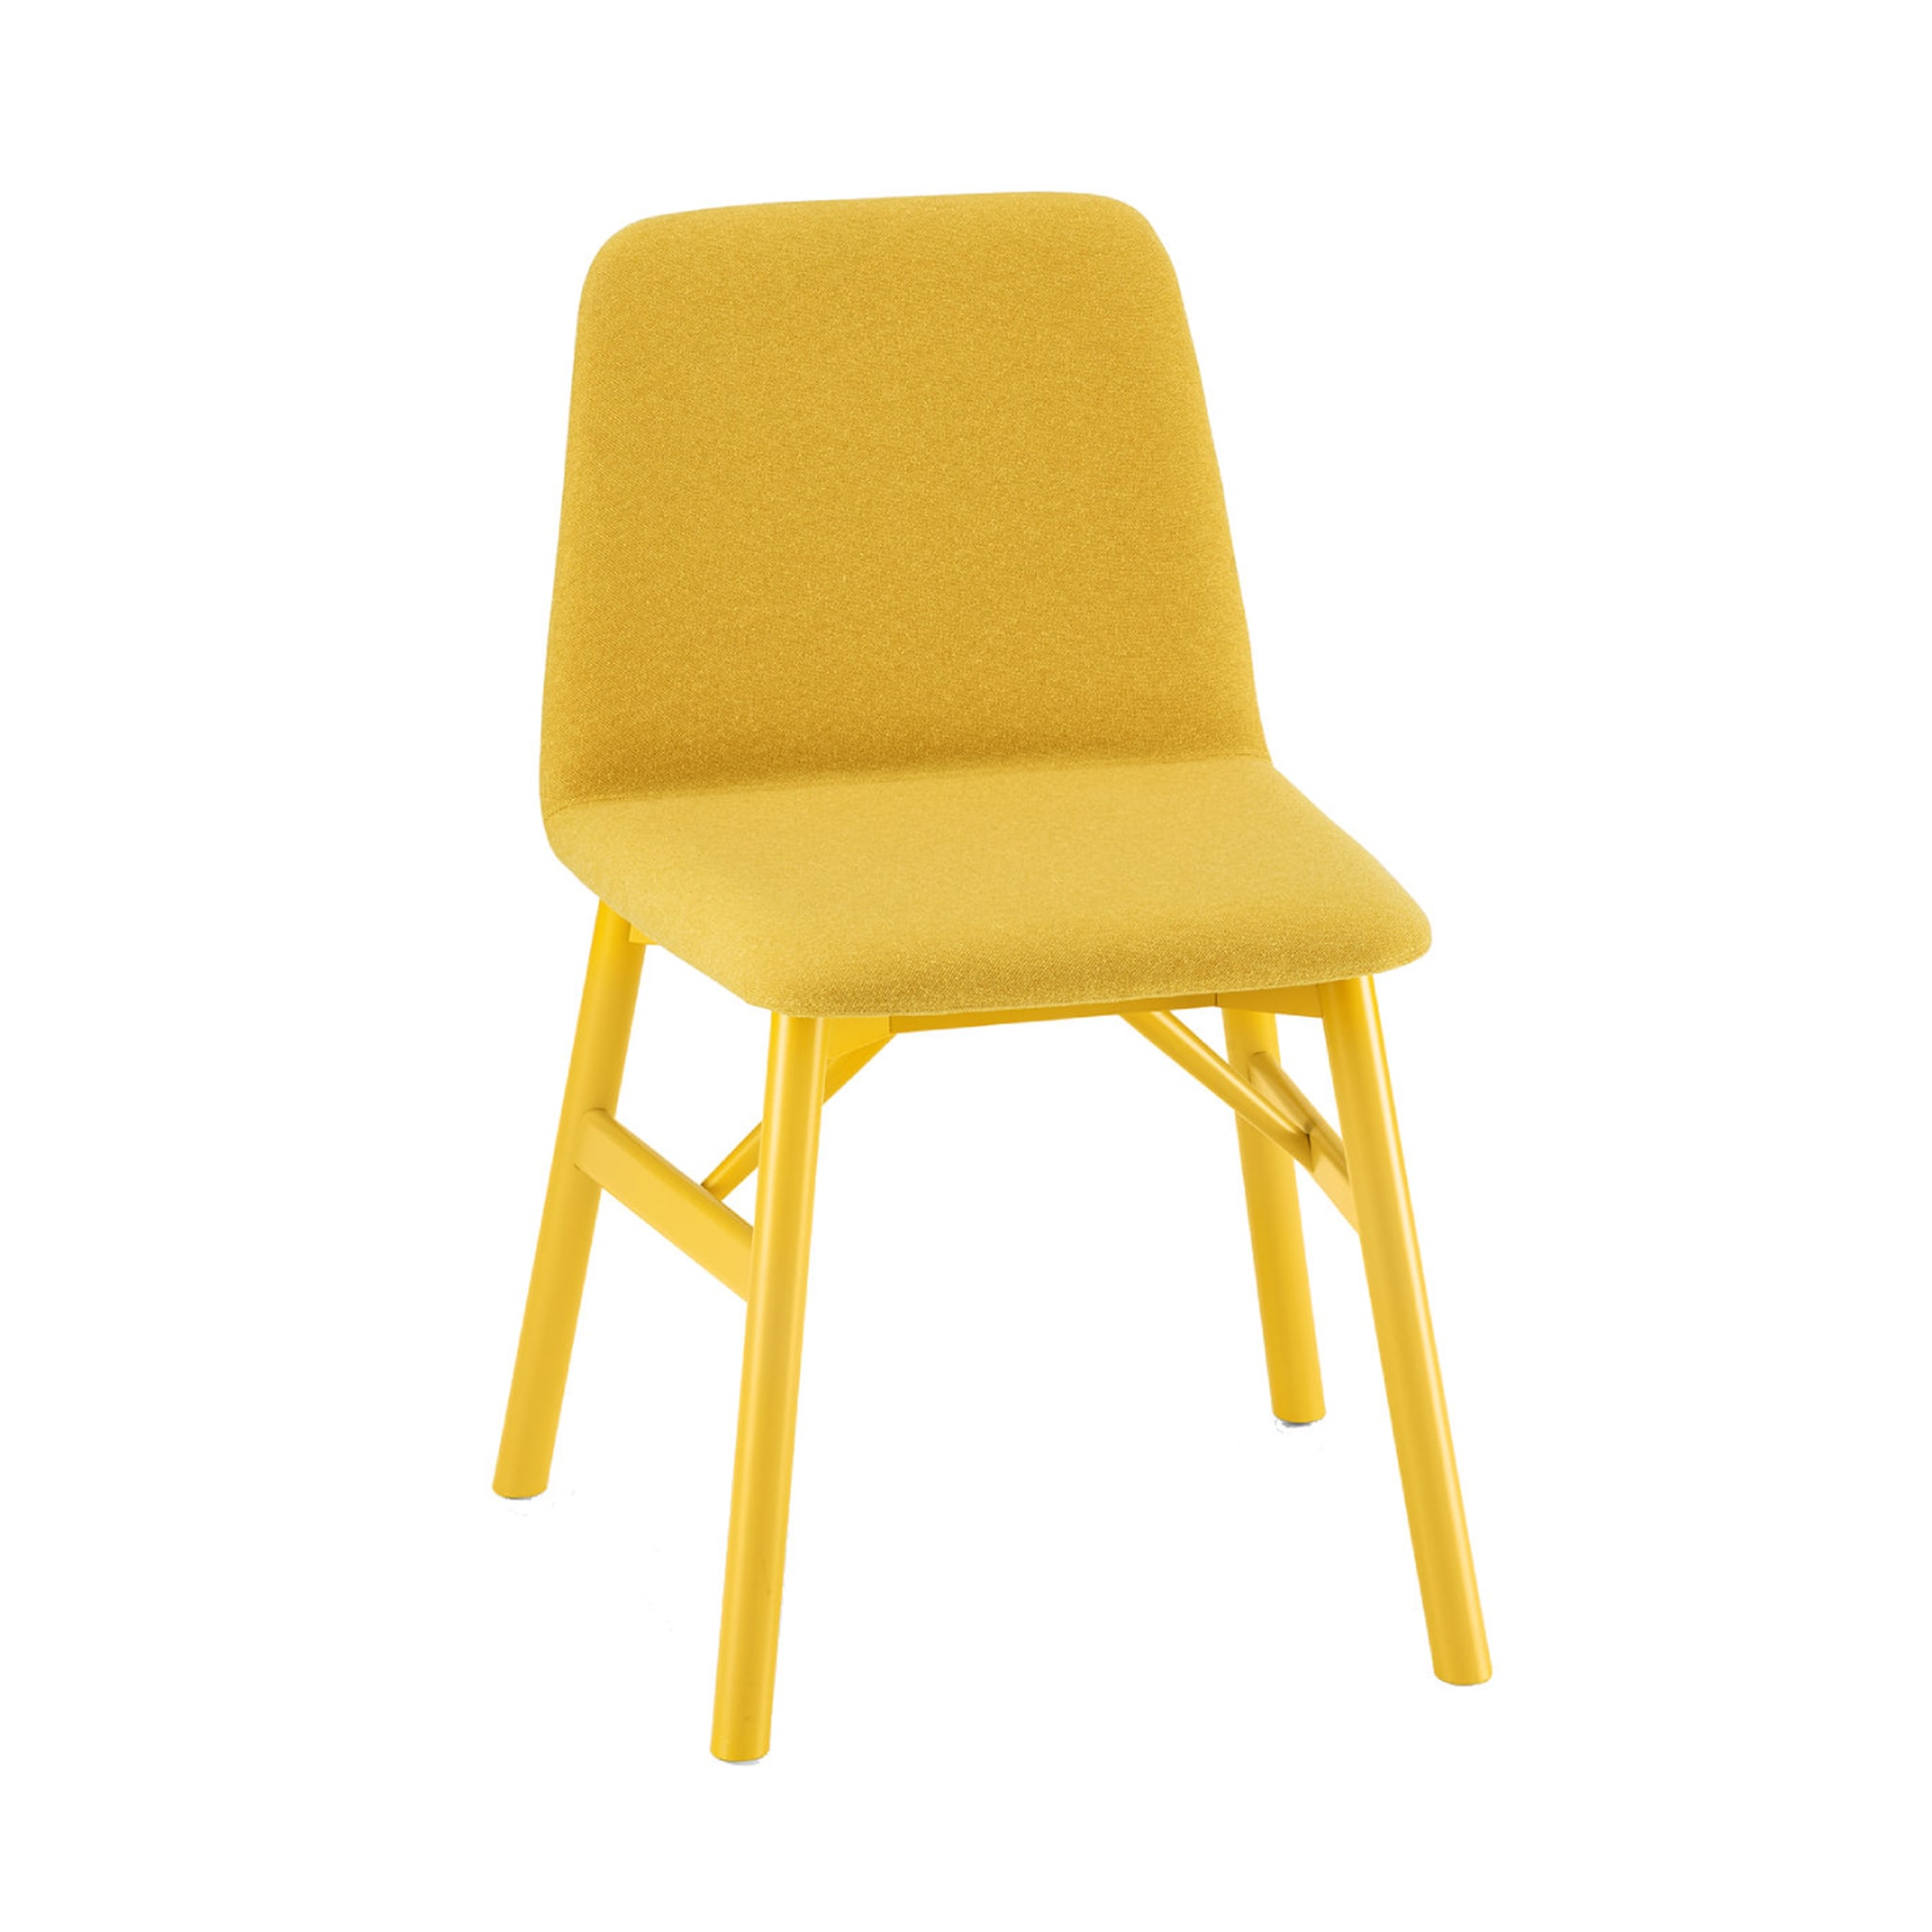 Bardot Le Yellow Chair - Main view